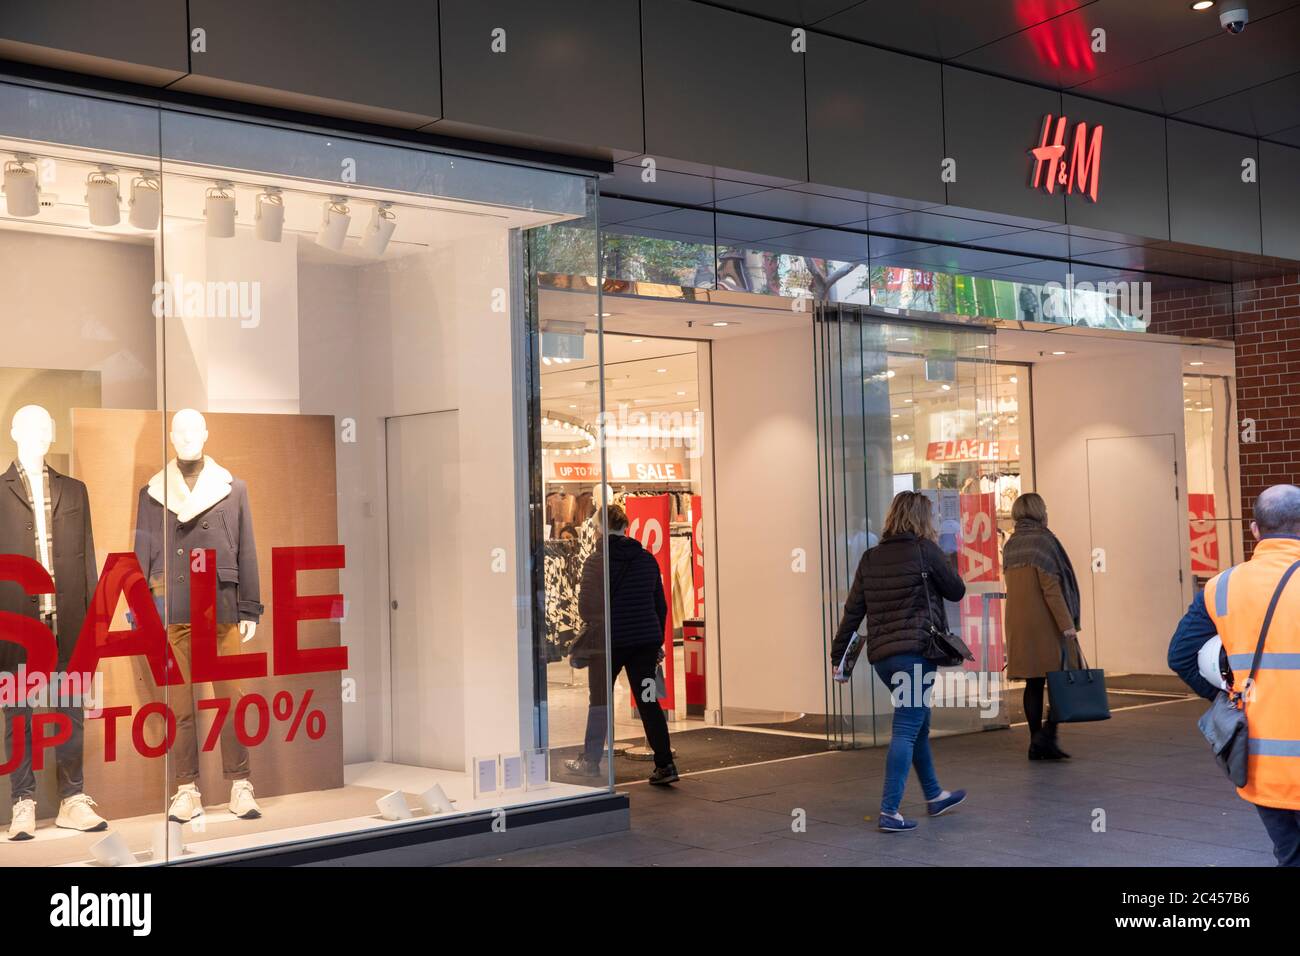 H&M clothing store in pitt street Sydney with 70% sale on,Sydney,Australia  Stock Photo - Alamy